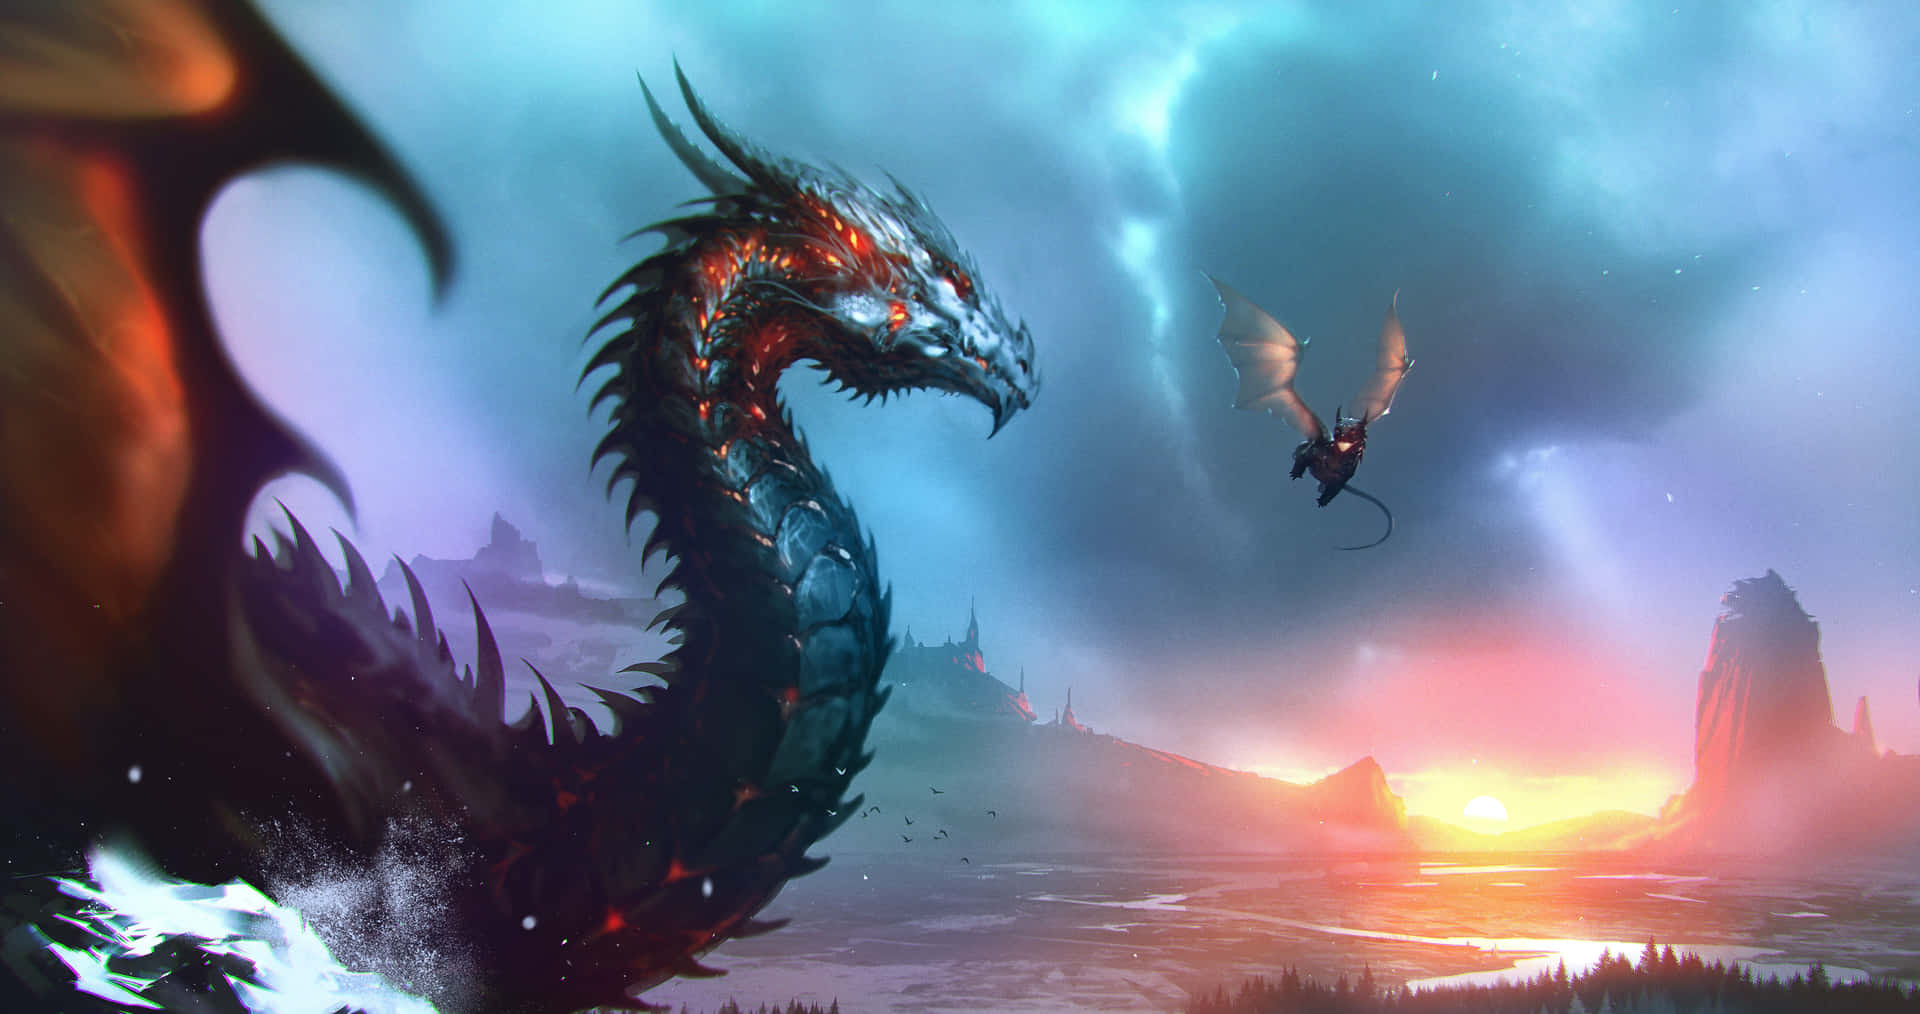 En mysterious mytisk drage svæver over horisonten, mysteriøs og fascinerende. Wallpaper